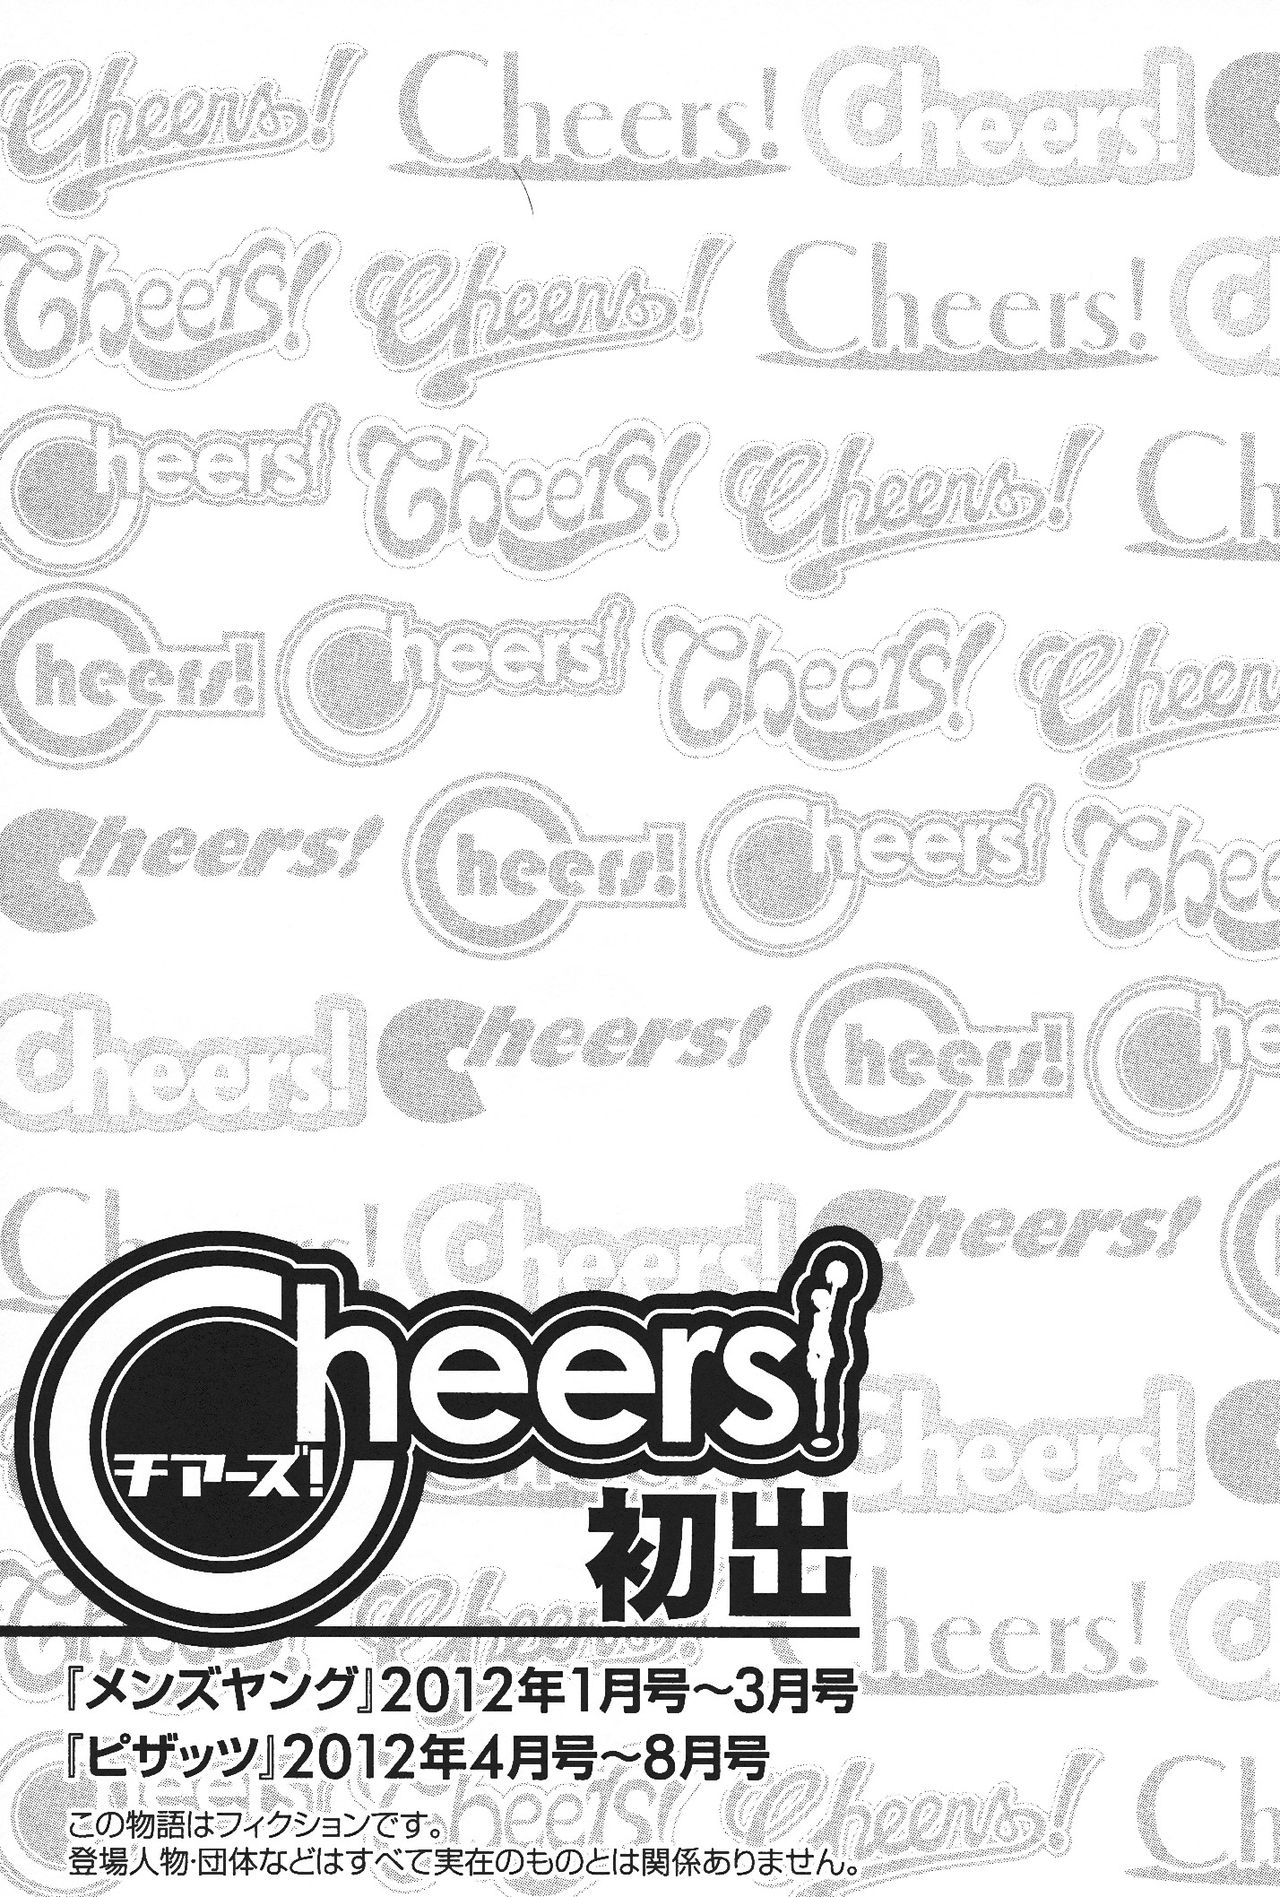 [Charlie Nishinaka] Cheers! 12 [チャーリーにしなか] Cheers! 12